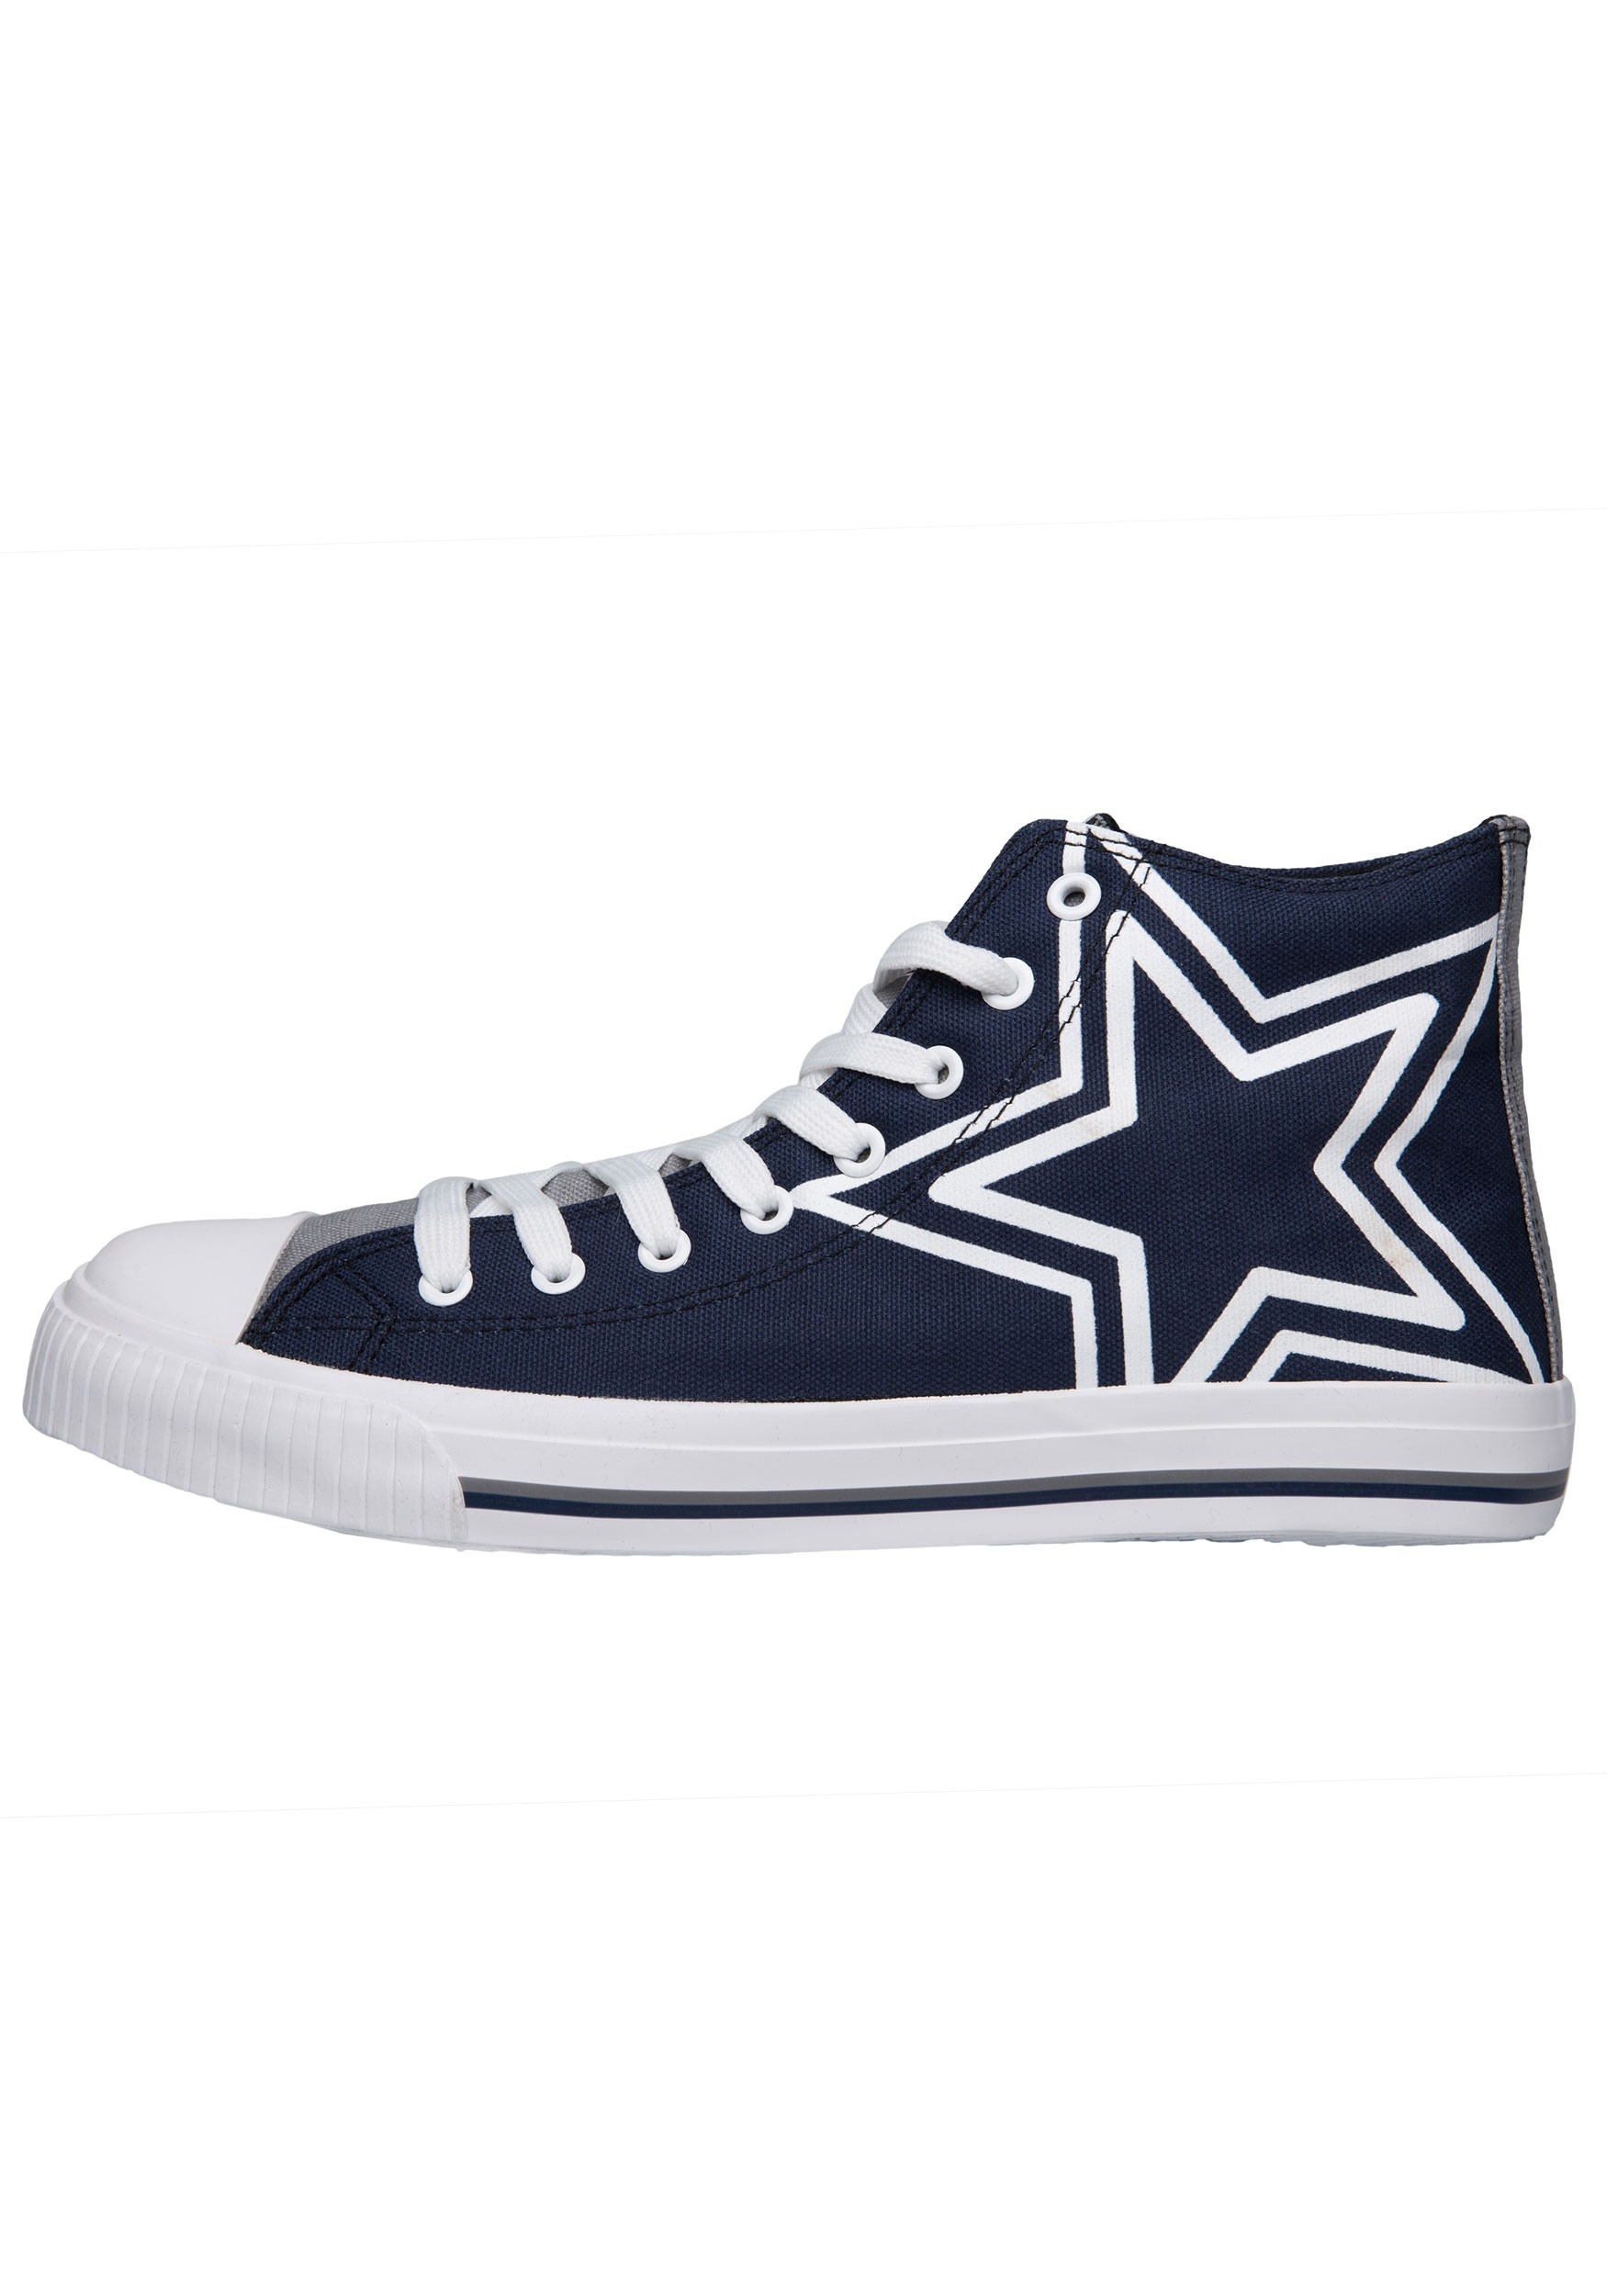 Dallas Cowboys Big Logo Low Top Sneakers Team Color Shoes US Men's Sizing 